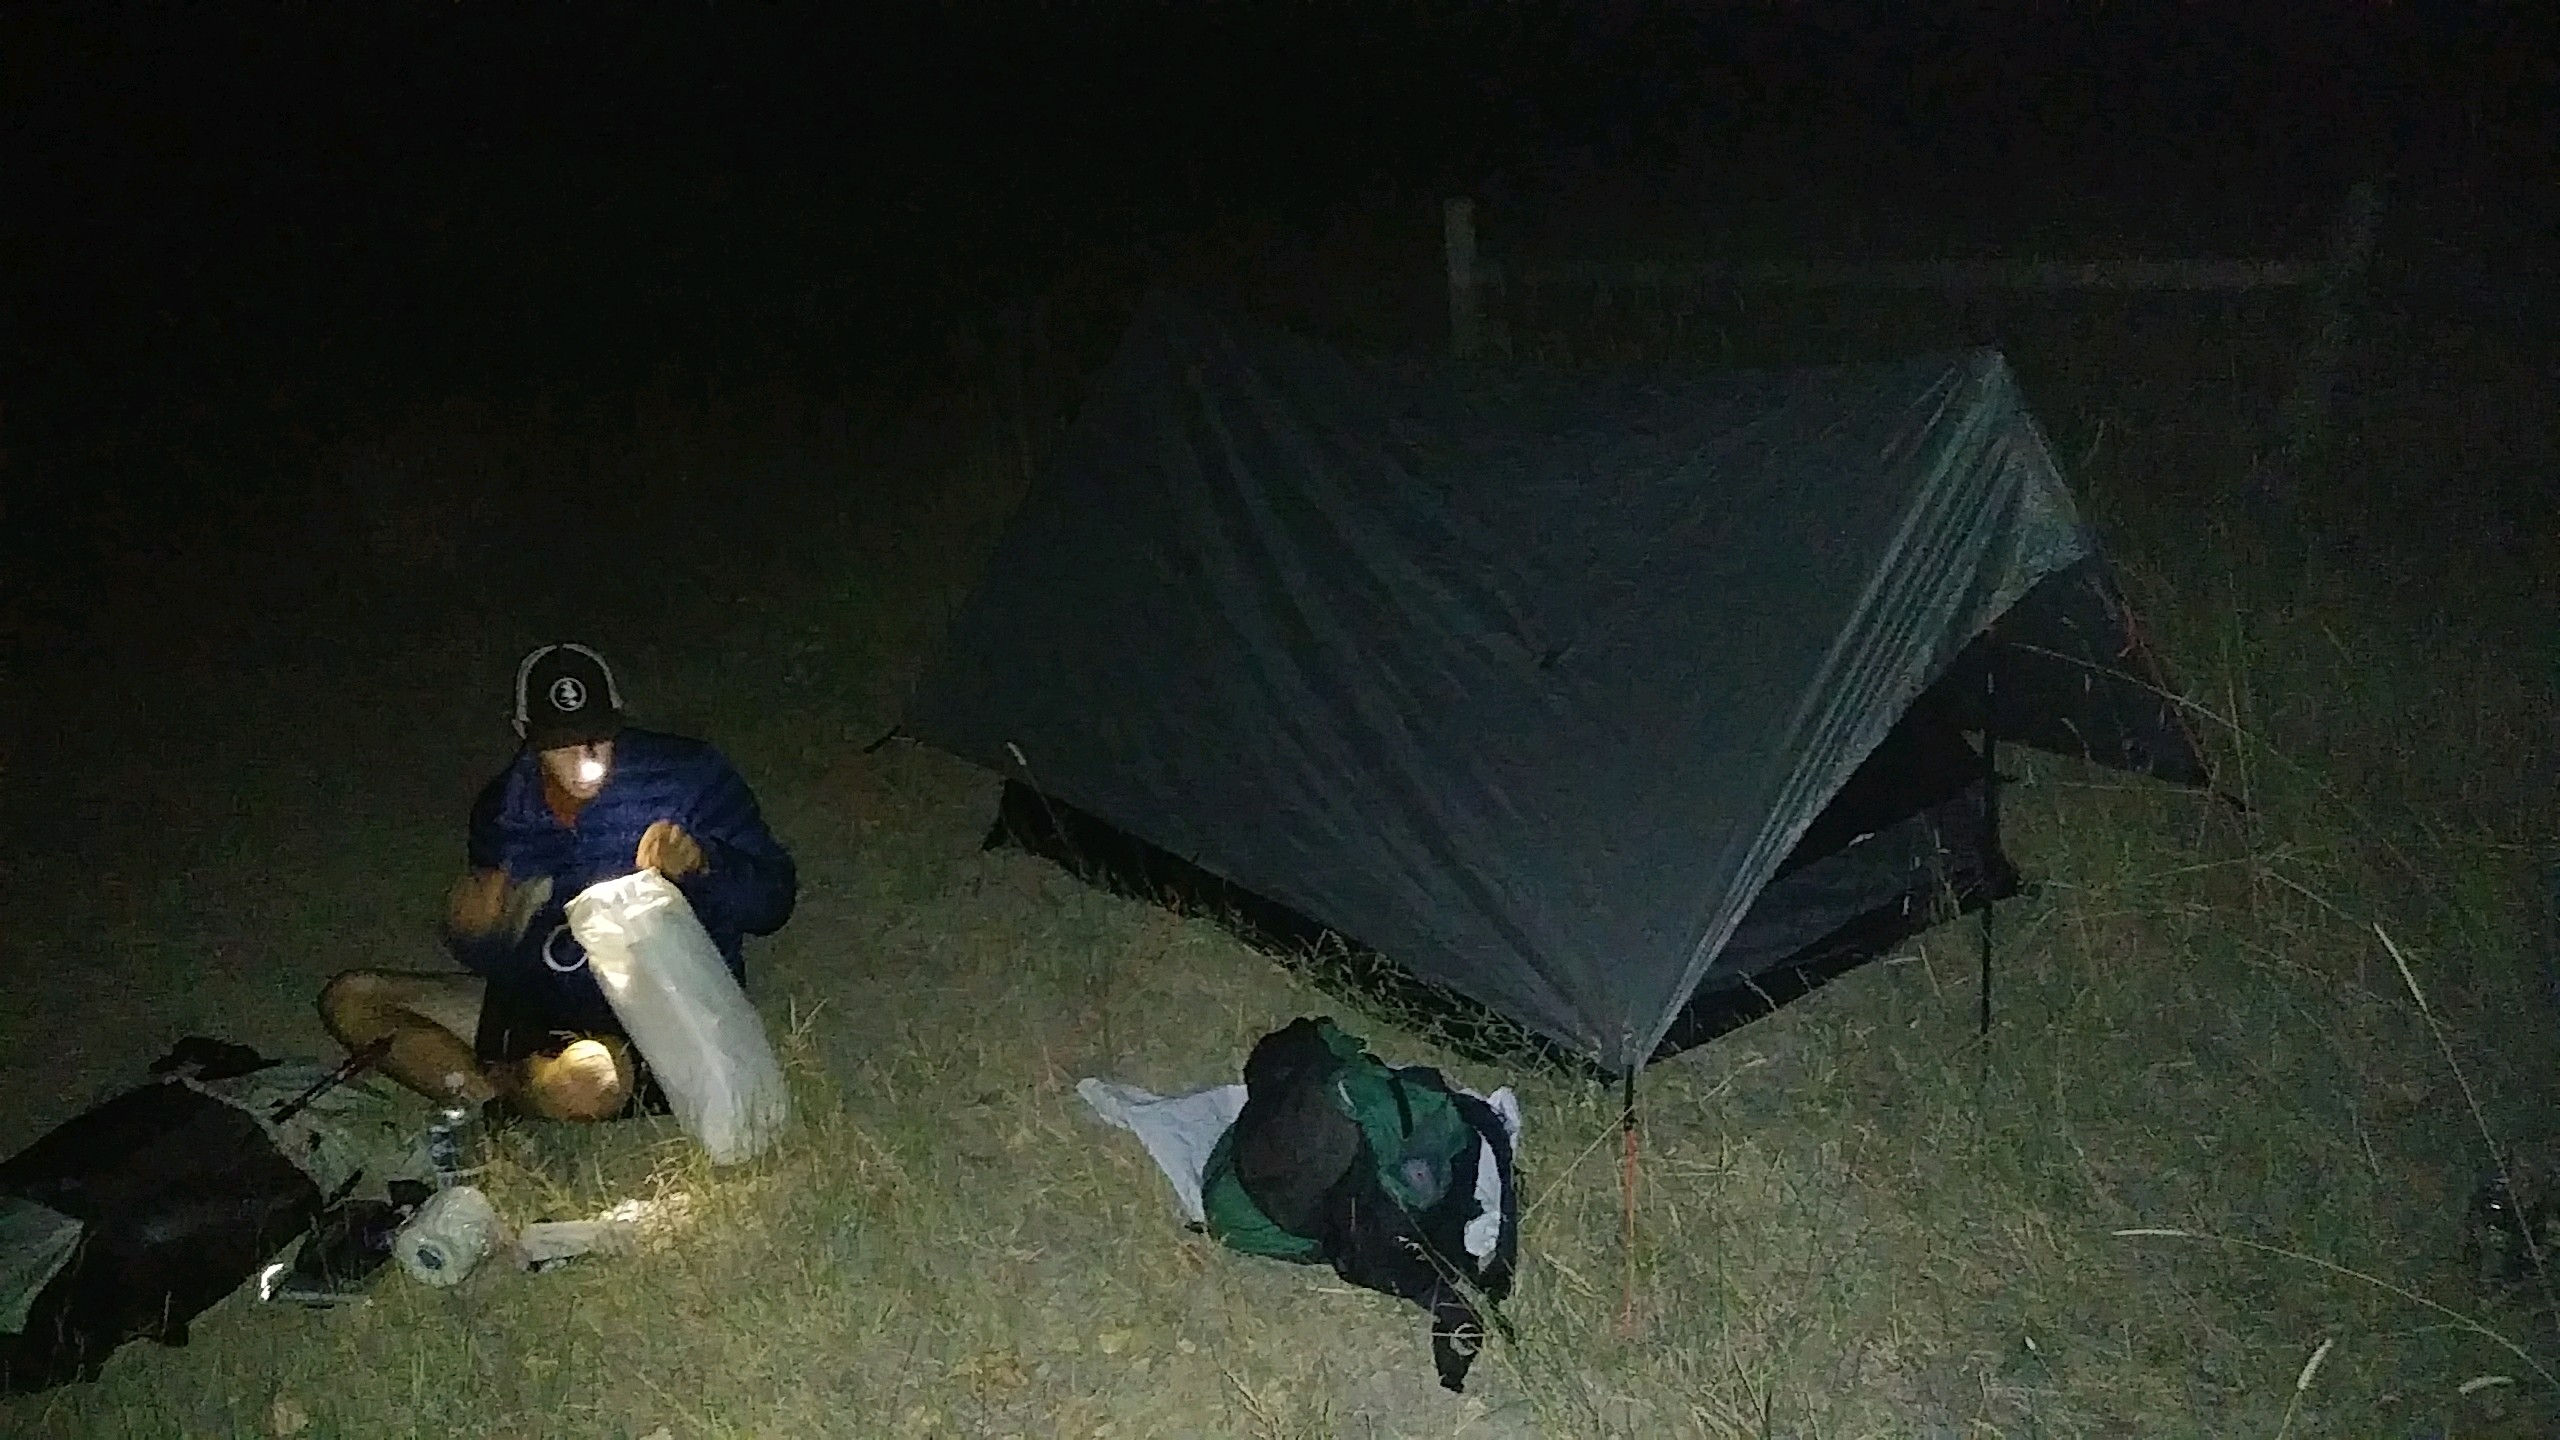 Camp Site on Kootenai River